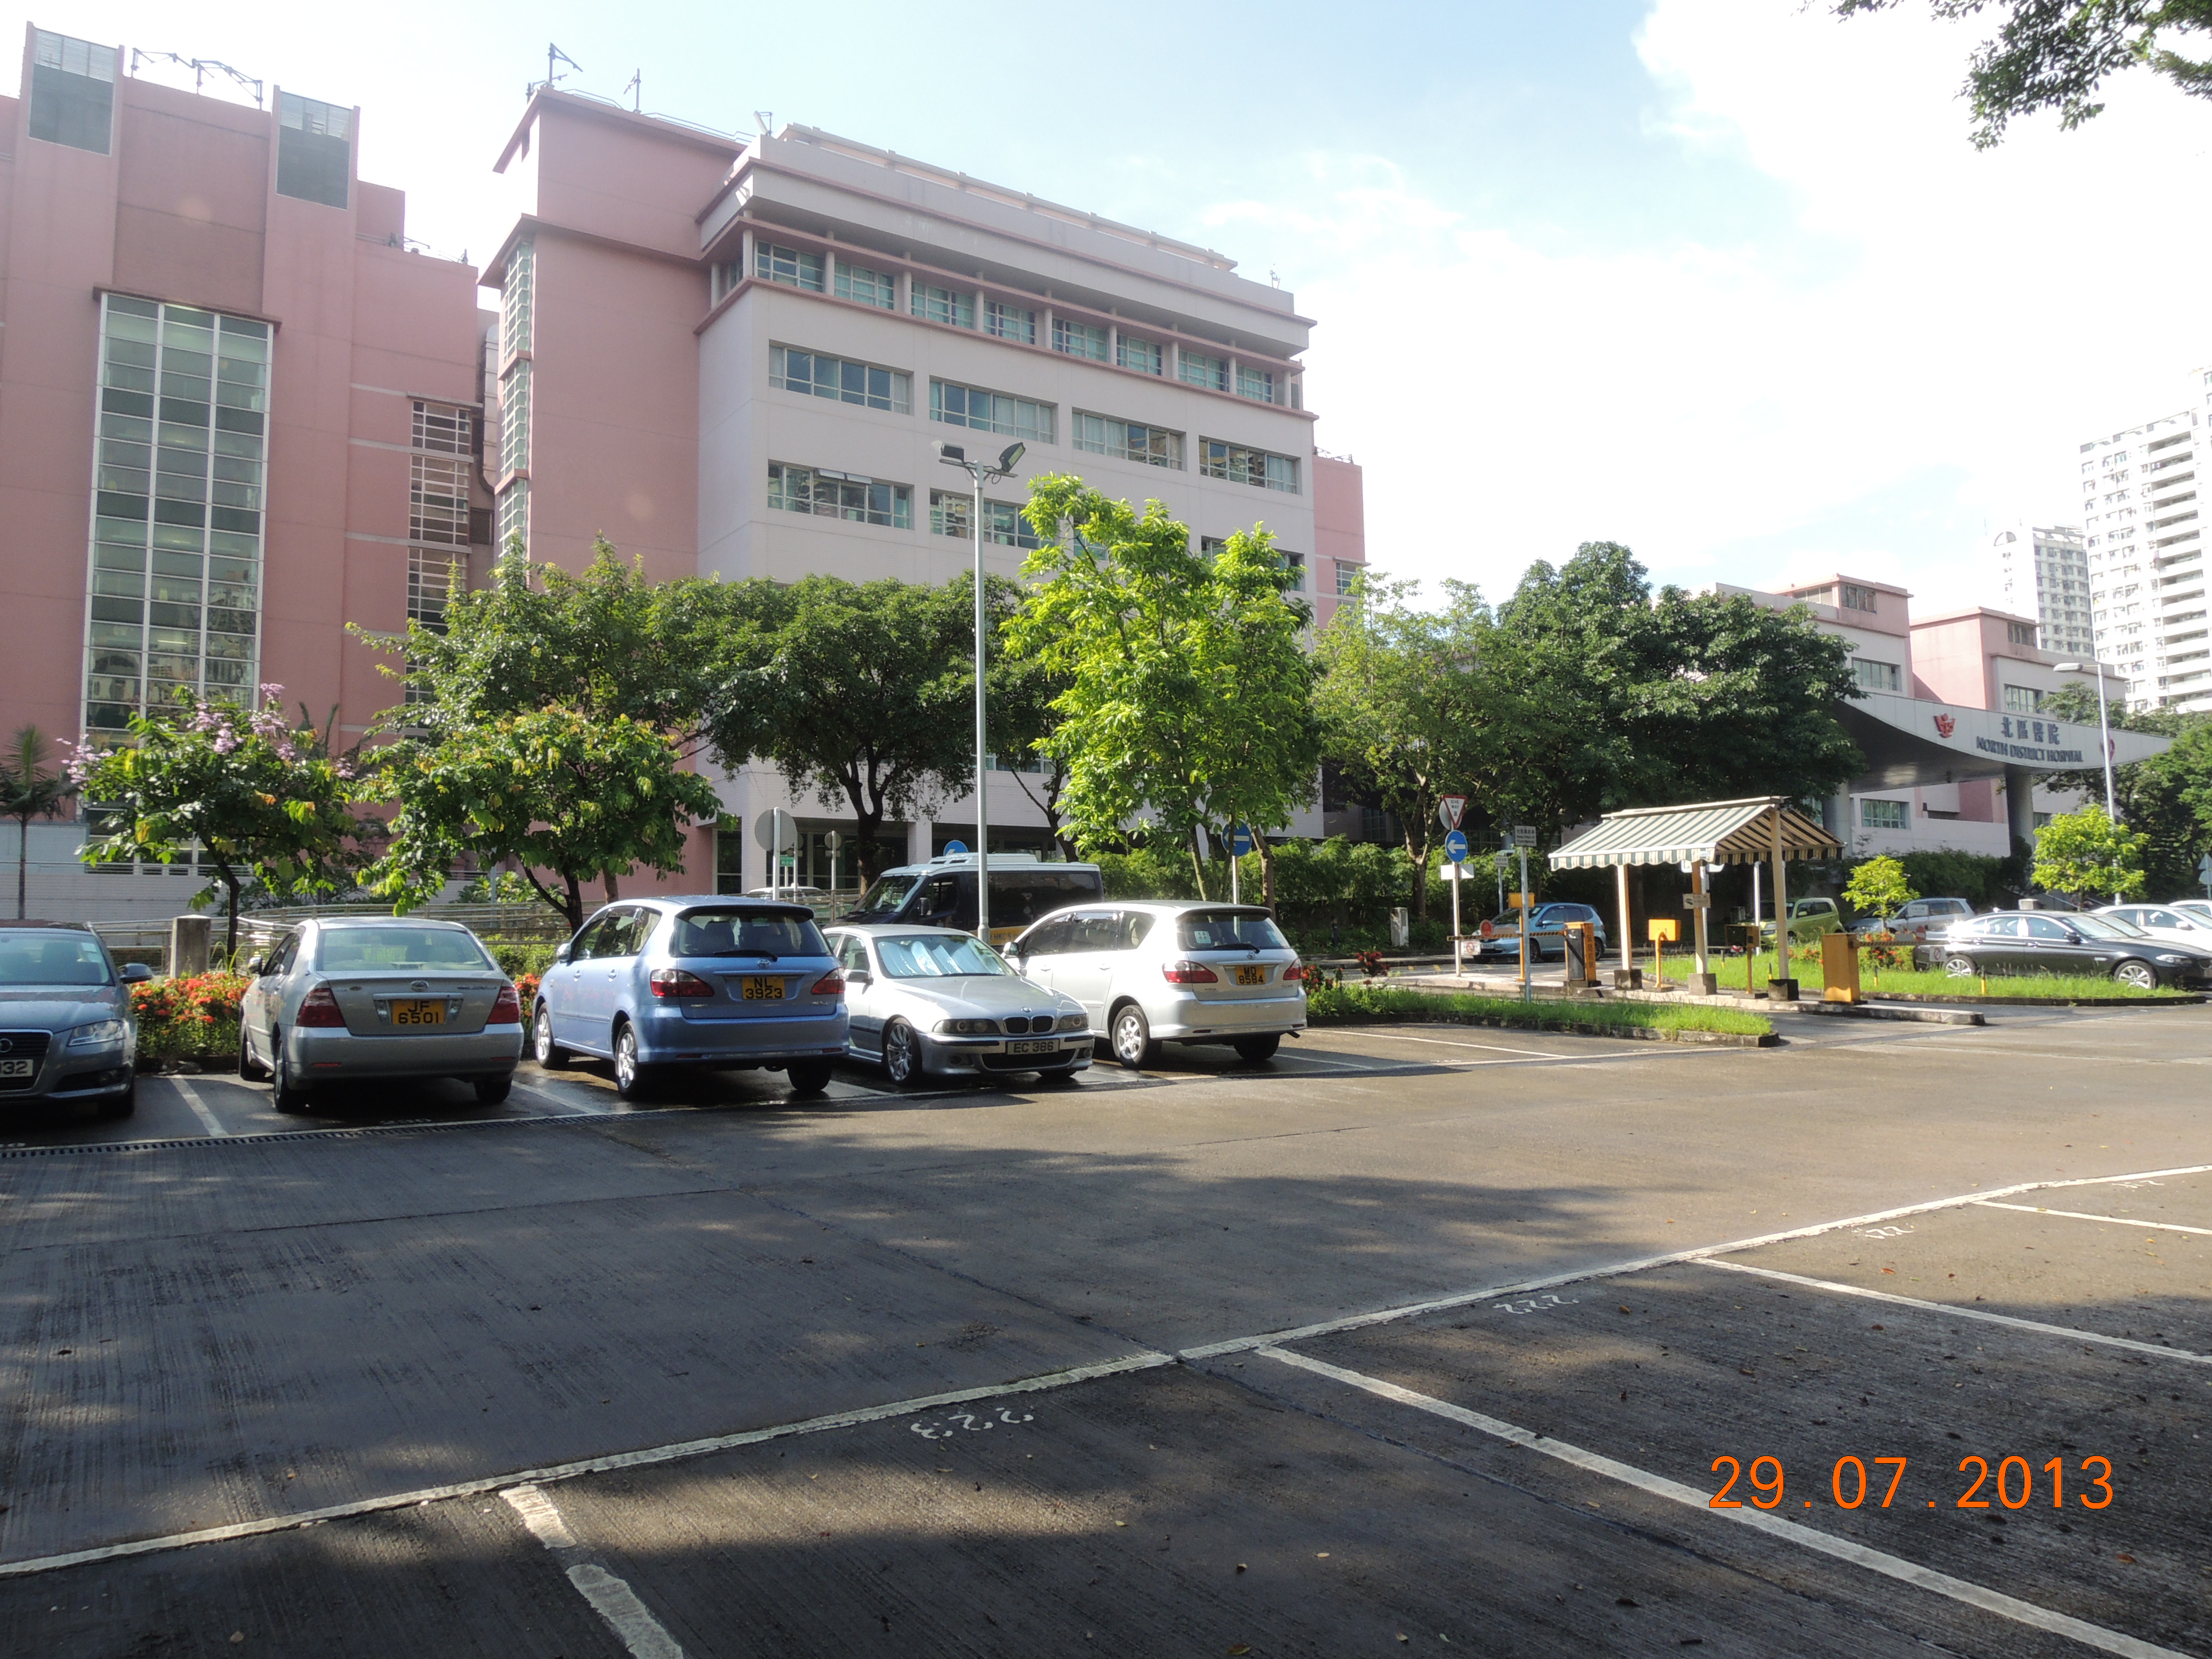 Northern District Hospital, Shuemg Shui, Hong Kong